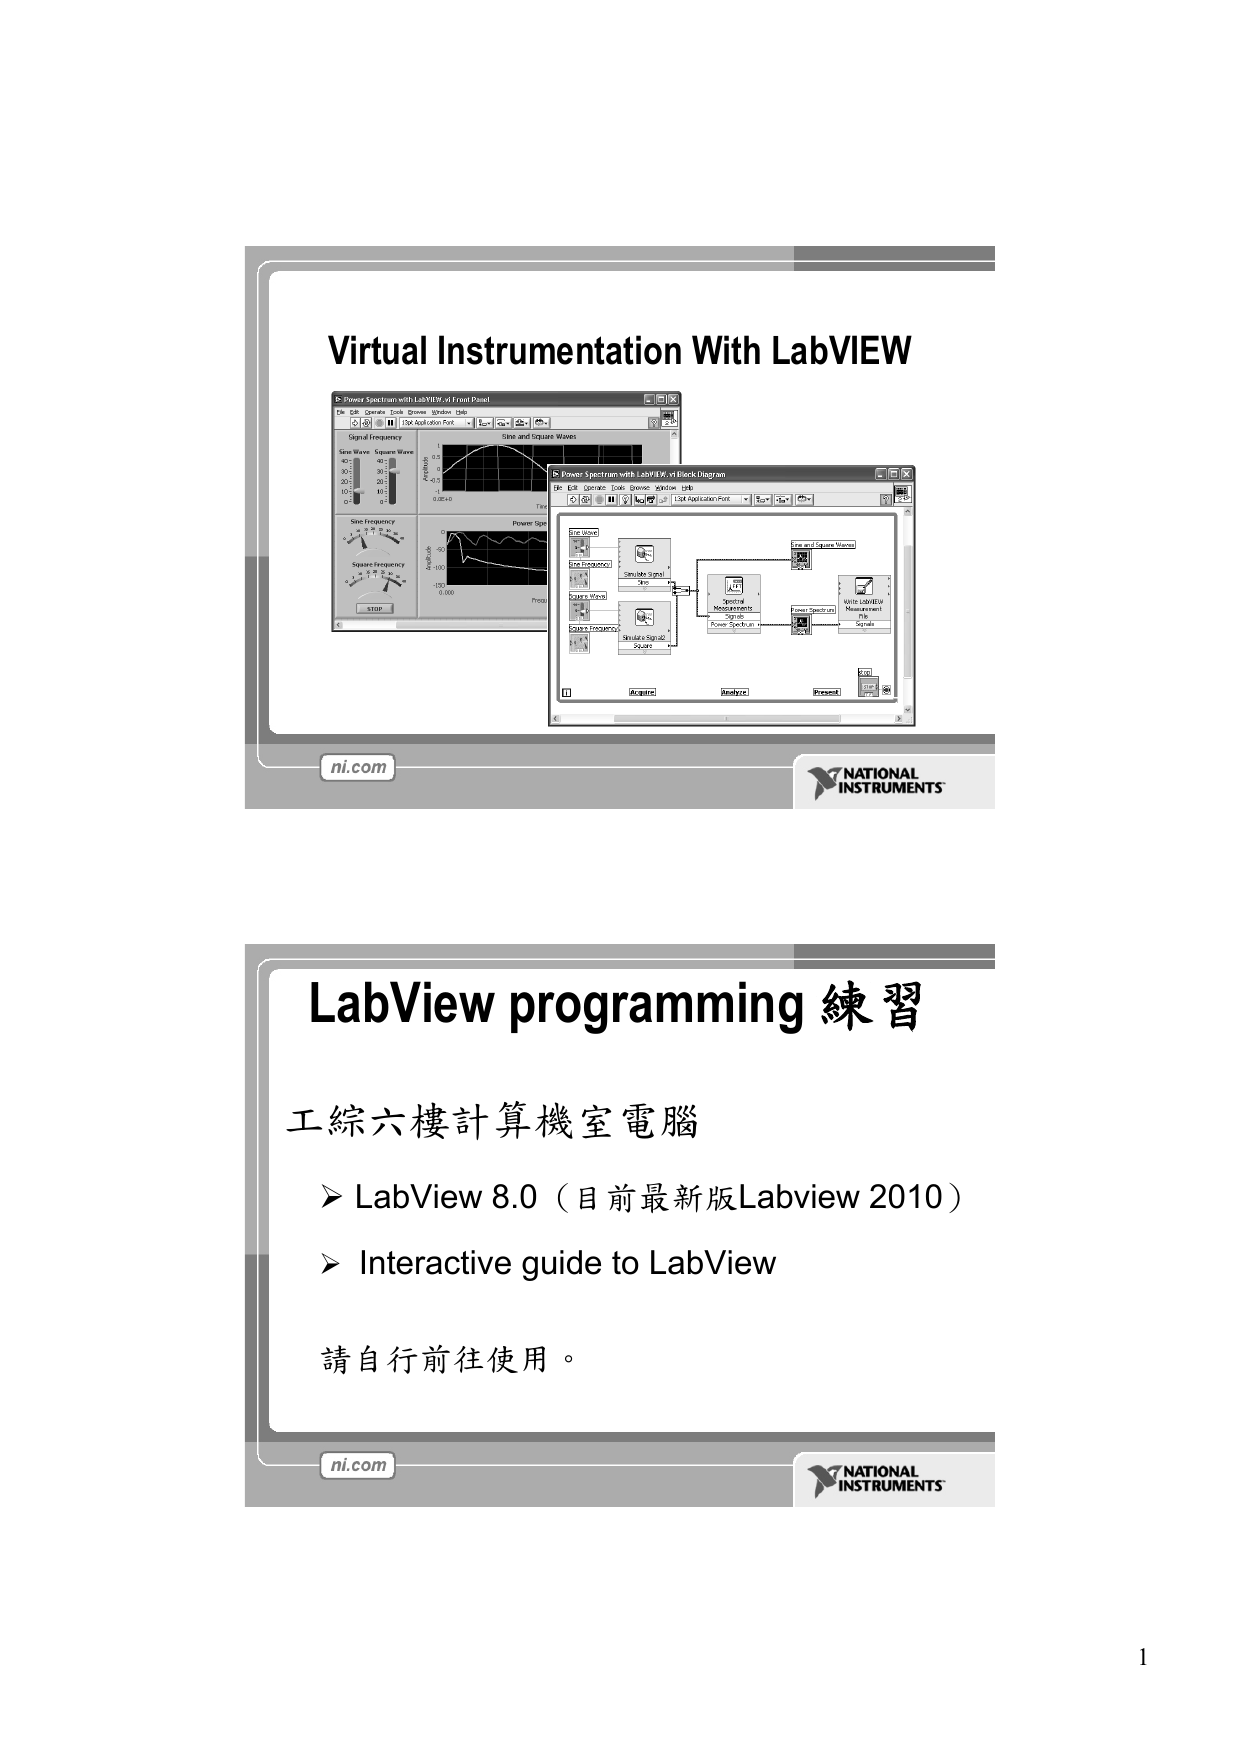 labview programming